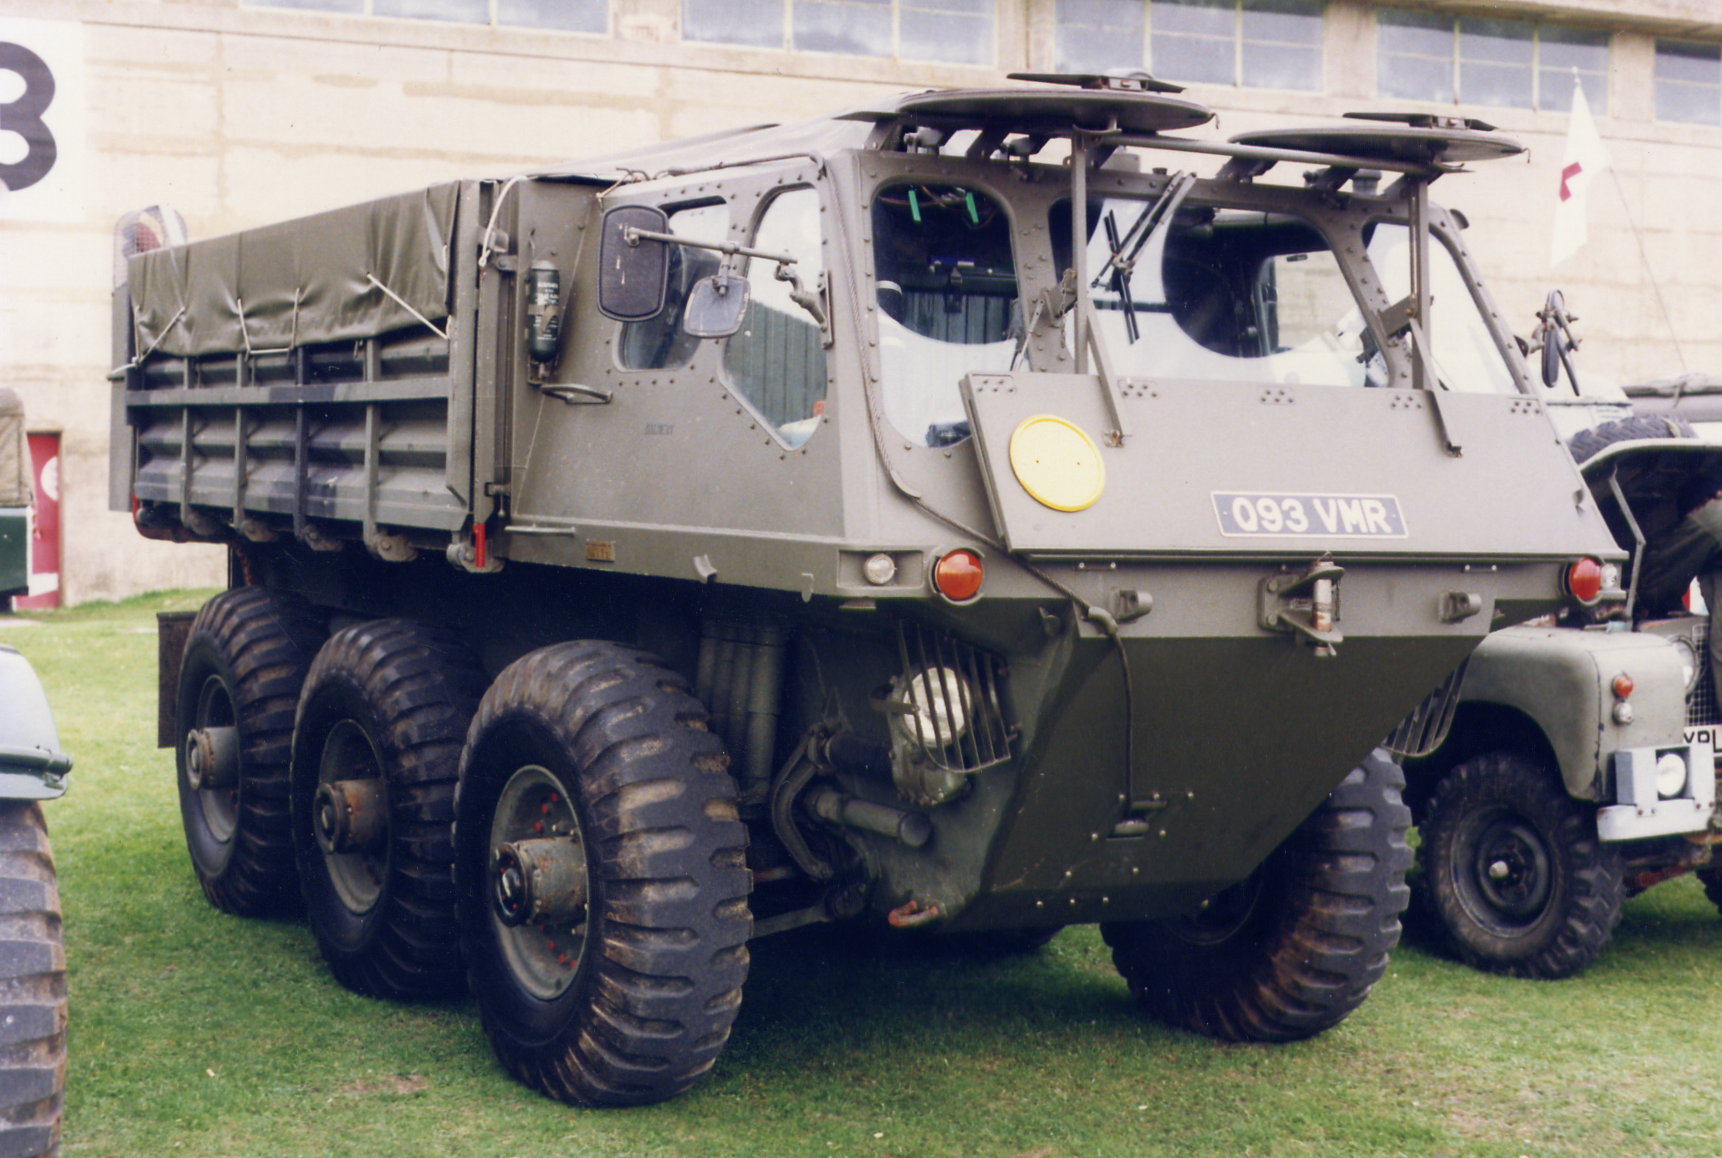 Military items | Military vehicles | Military trucks | Military ...